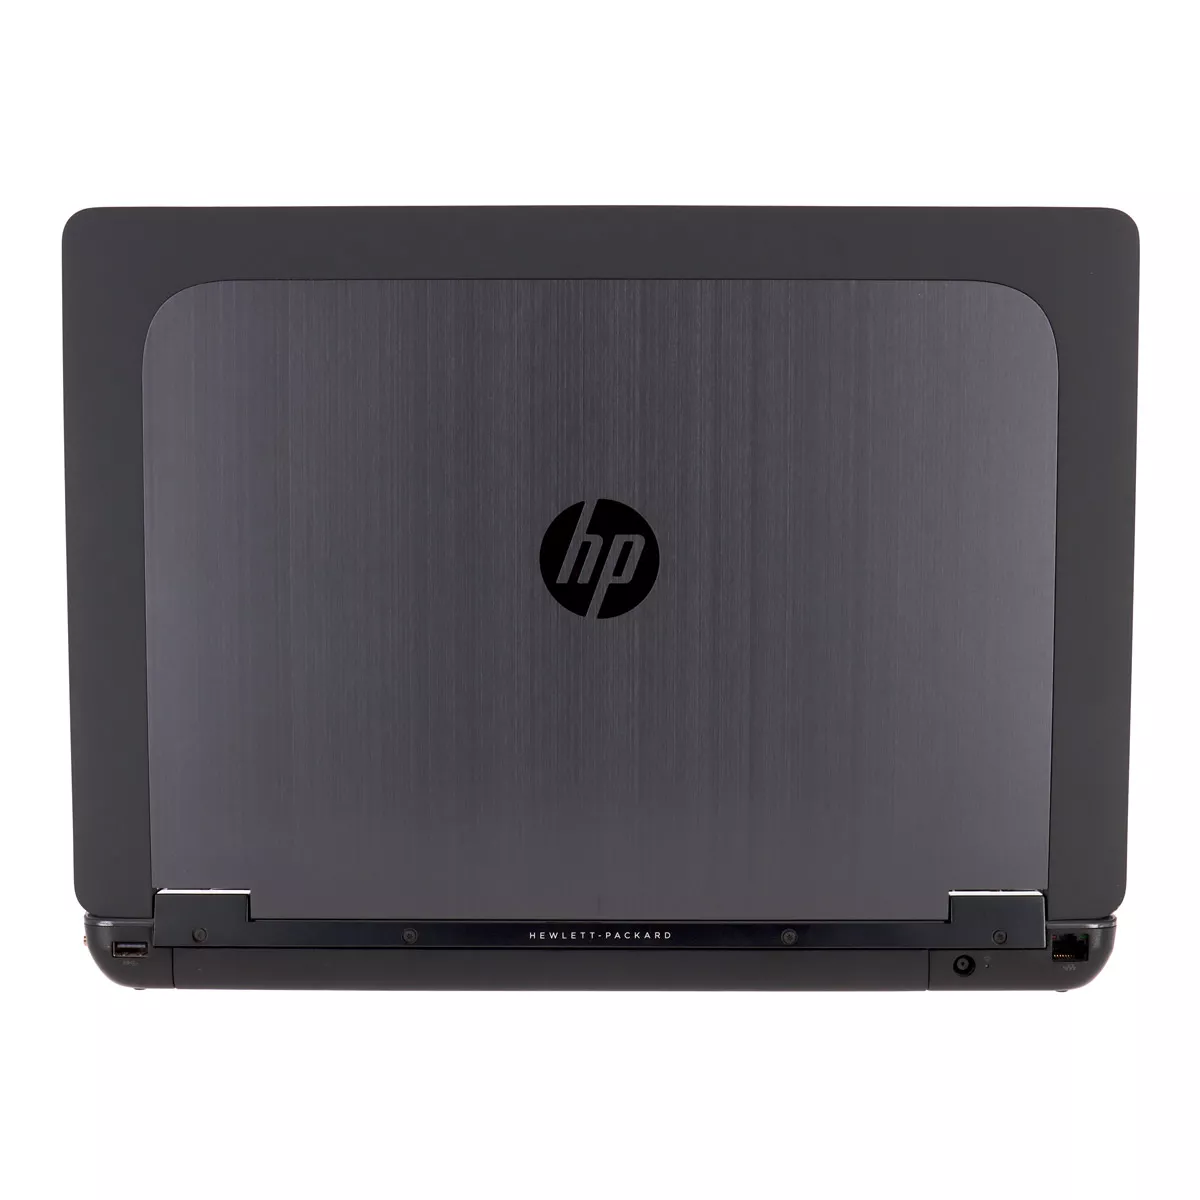 HP ZBook 15 Core i7 4800MQ nVidia Quadro K2100M Full-HD 240 GB SSD A+